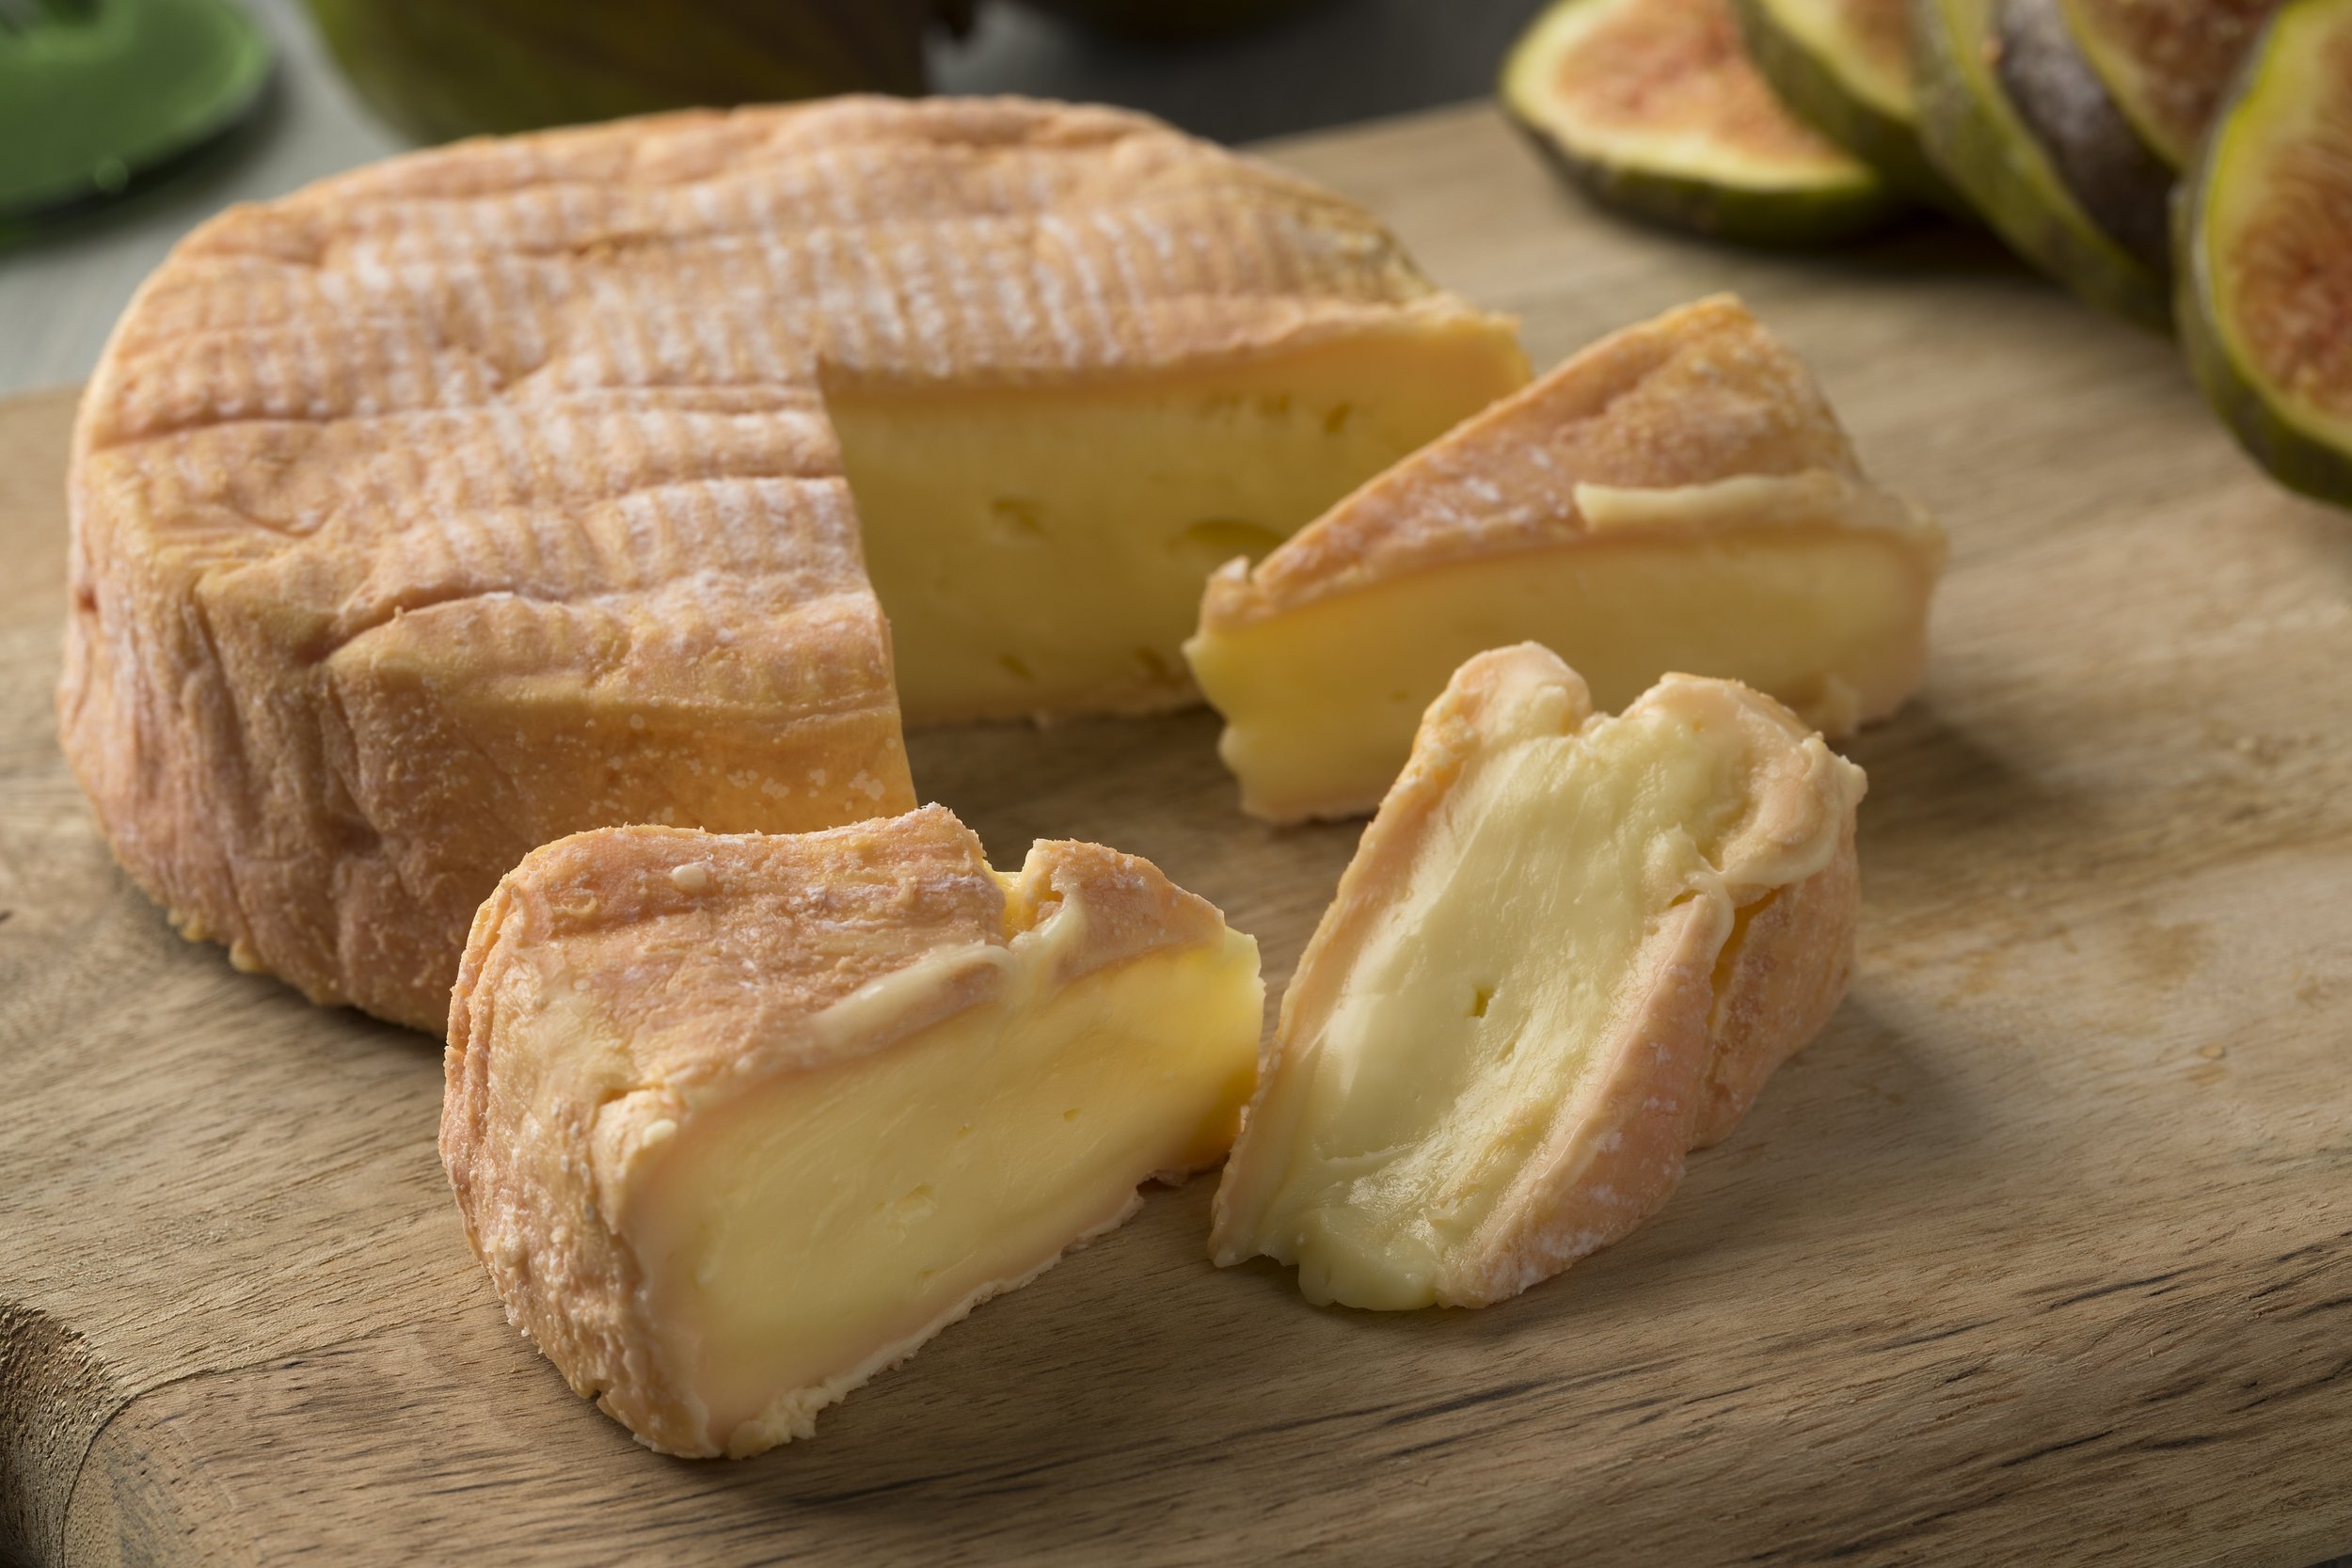 petit-munster-cheese-and-wedges-close-up-2021-08-26-16-56-44-utc.jpg